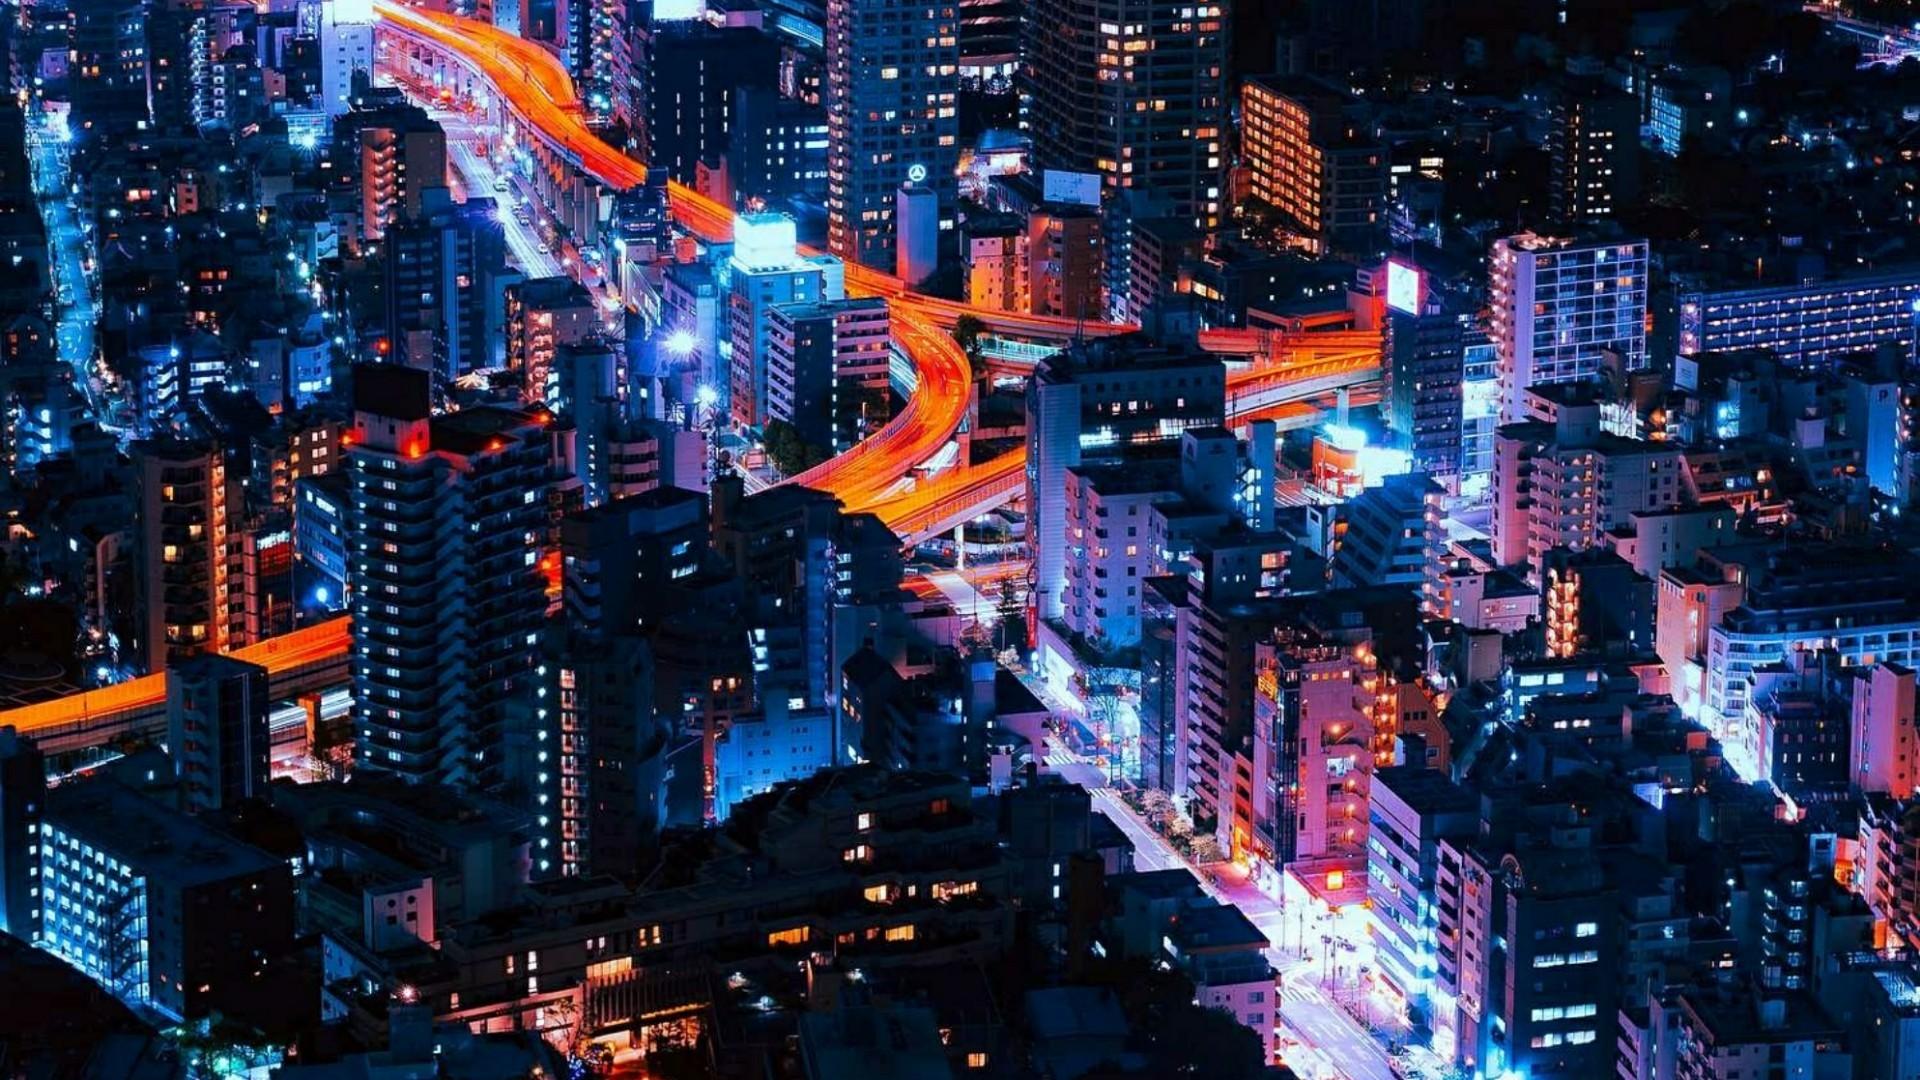 City Lights Wallpaper